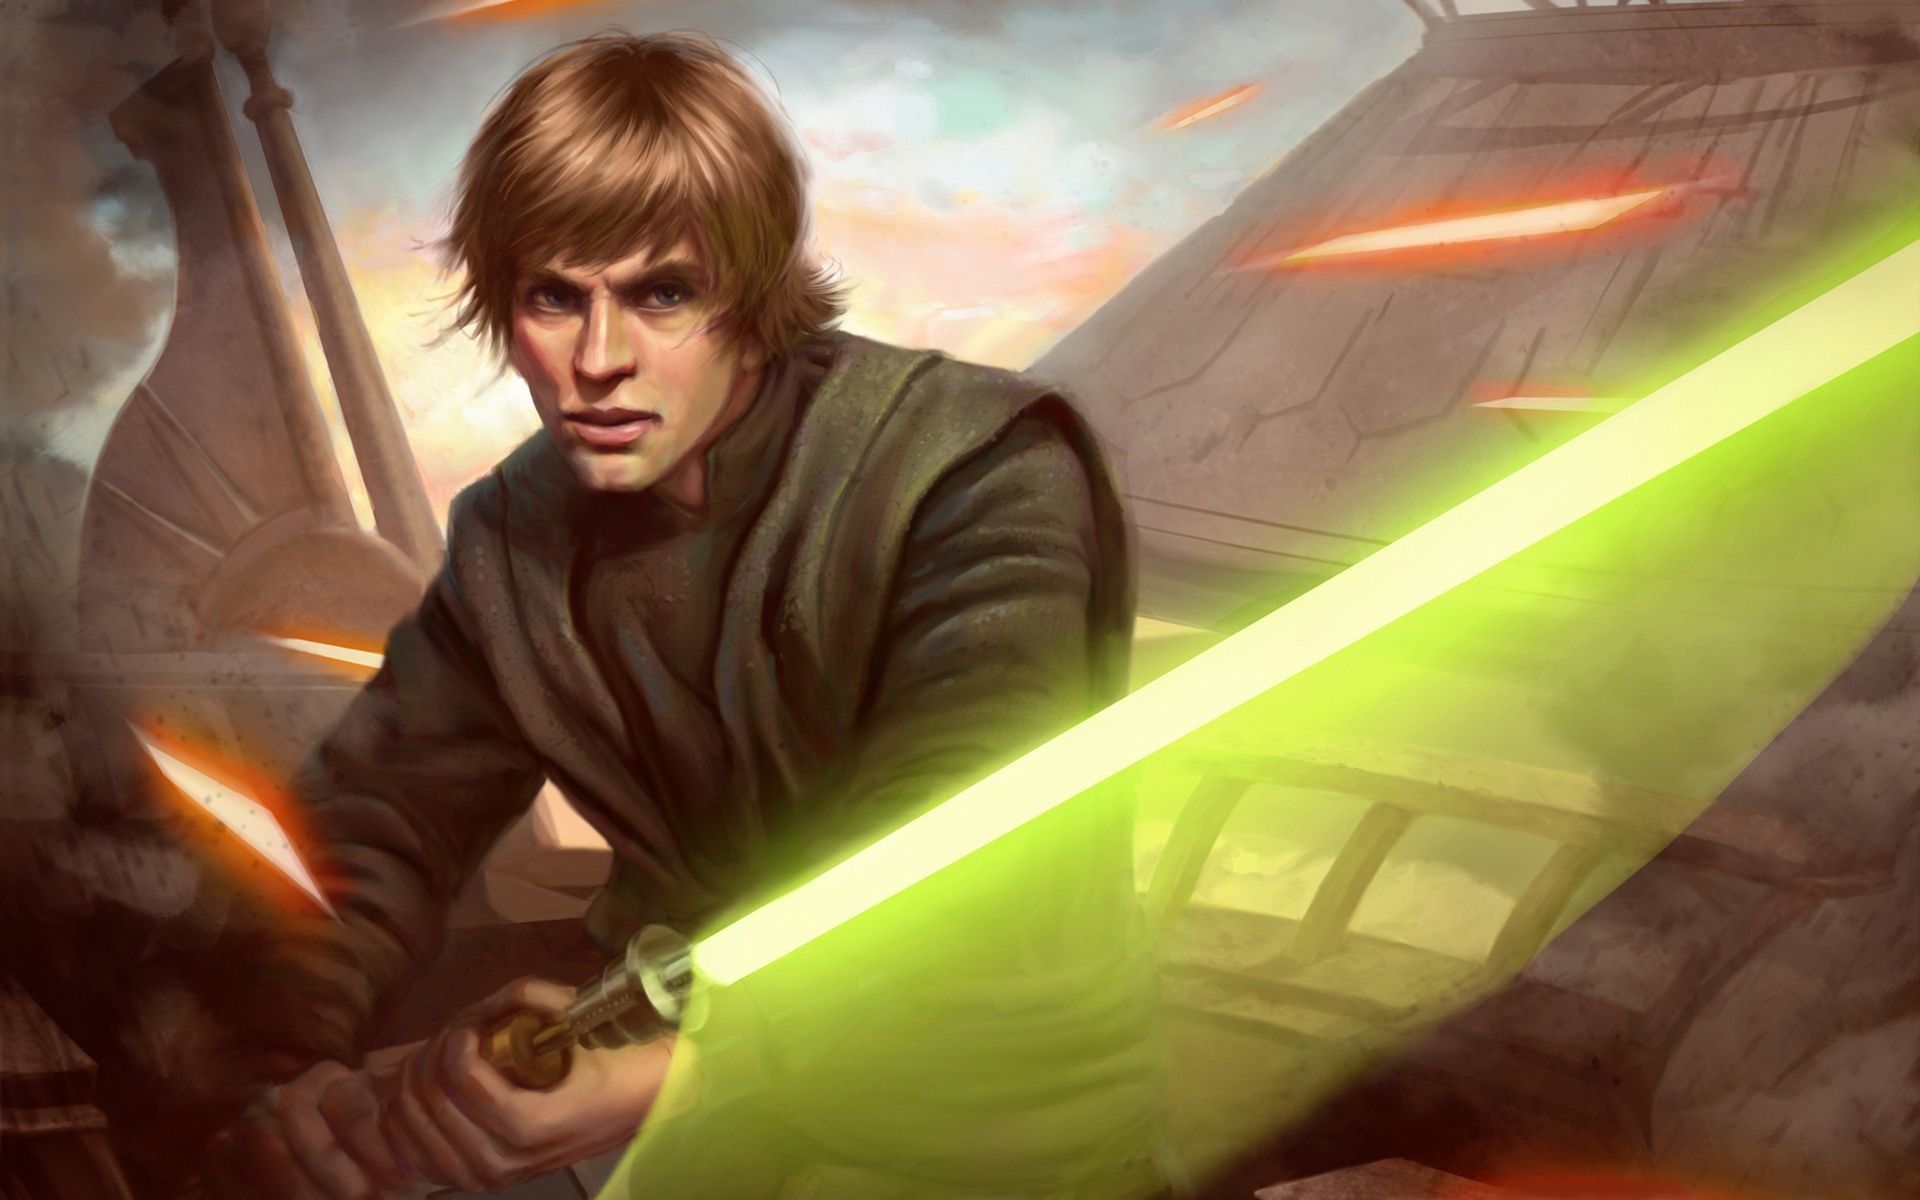 Luke Skywalker Wallpaper background picture